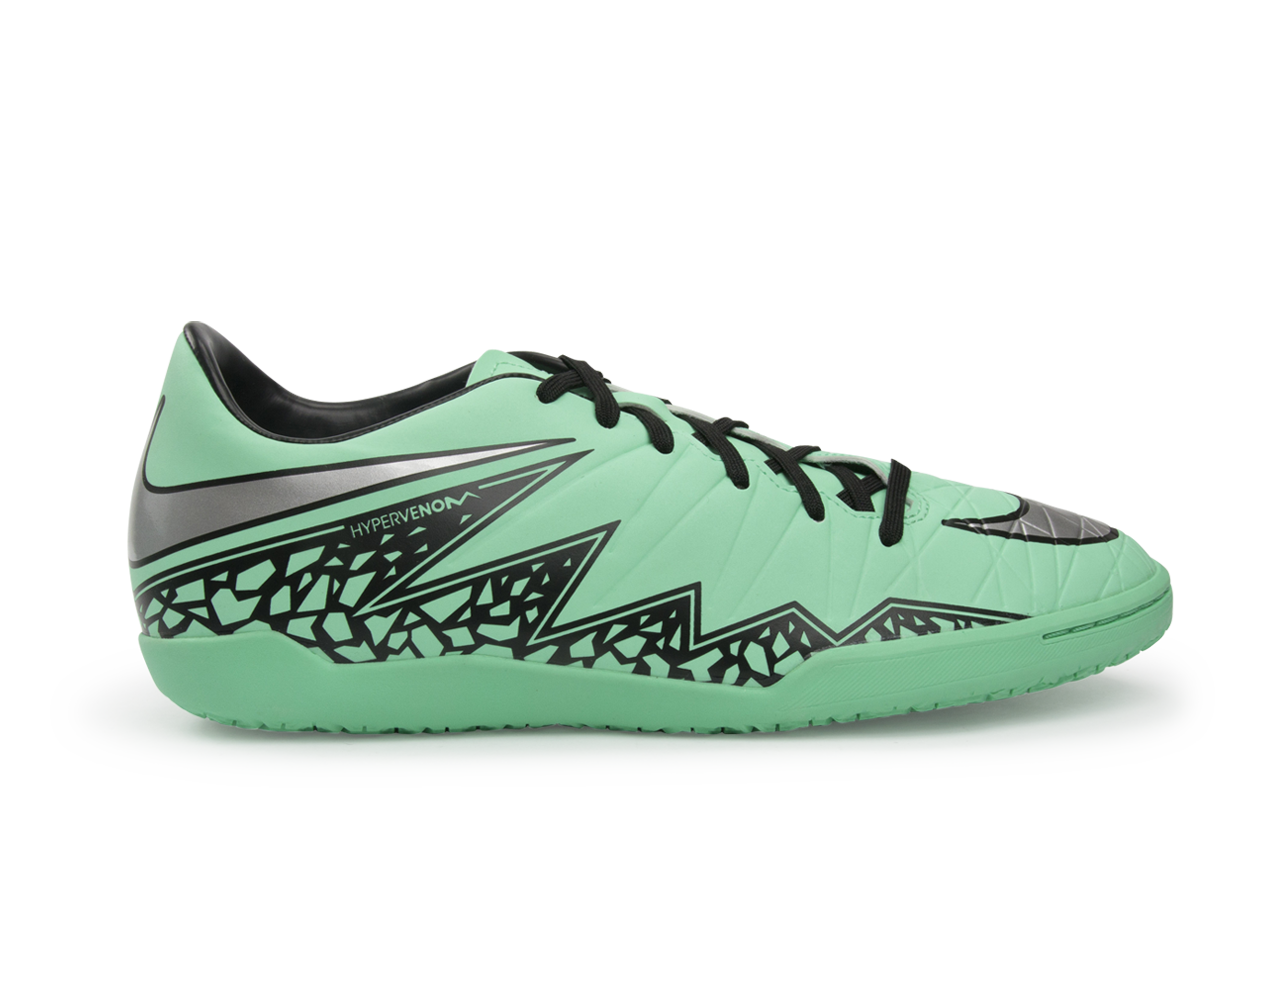 Nike Men's Hypervenom Phelon Indoor Soccer Shoes Green Glow/Metallic Silver/Hyper Orange